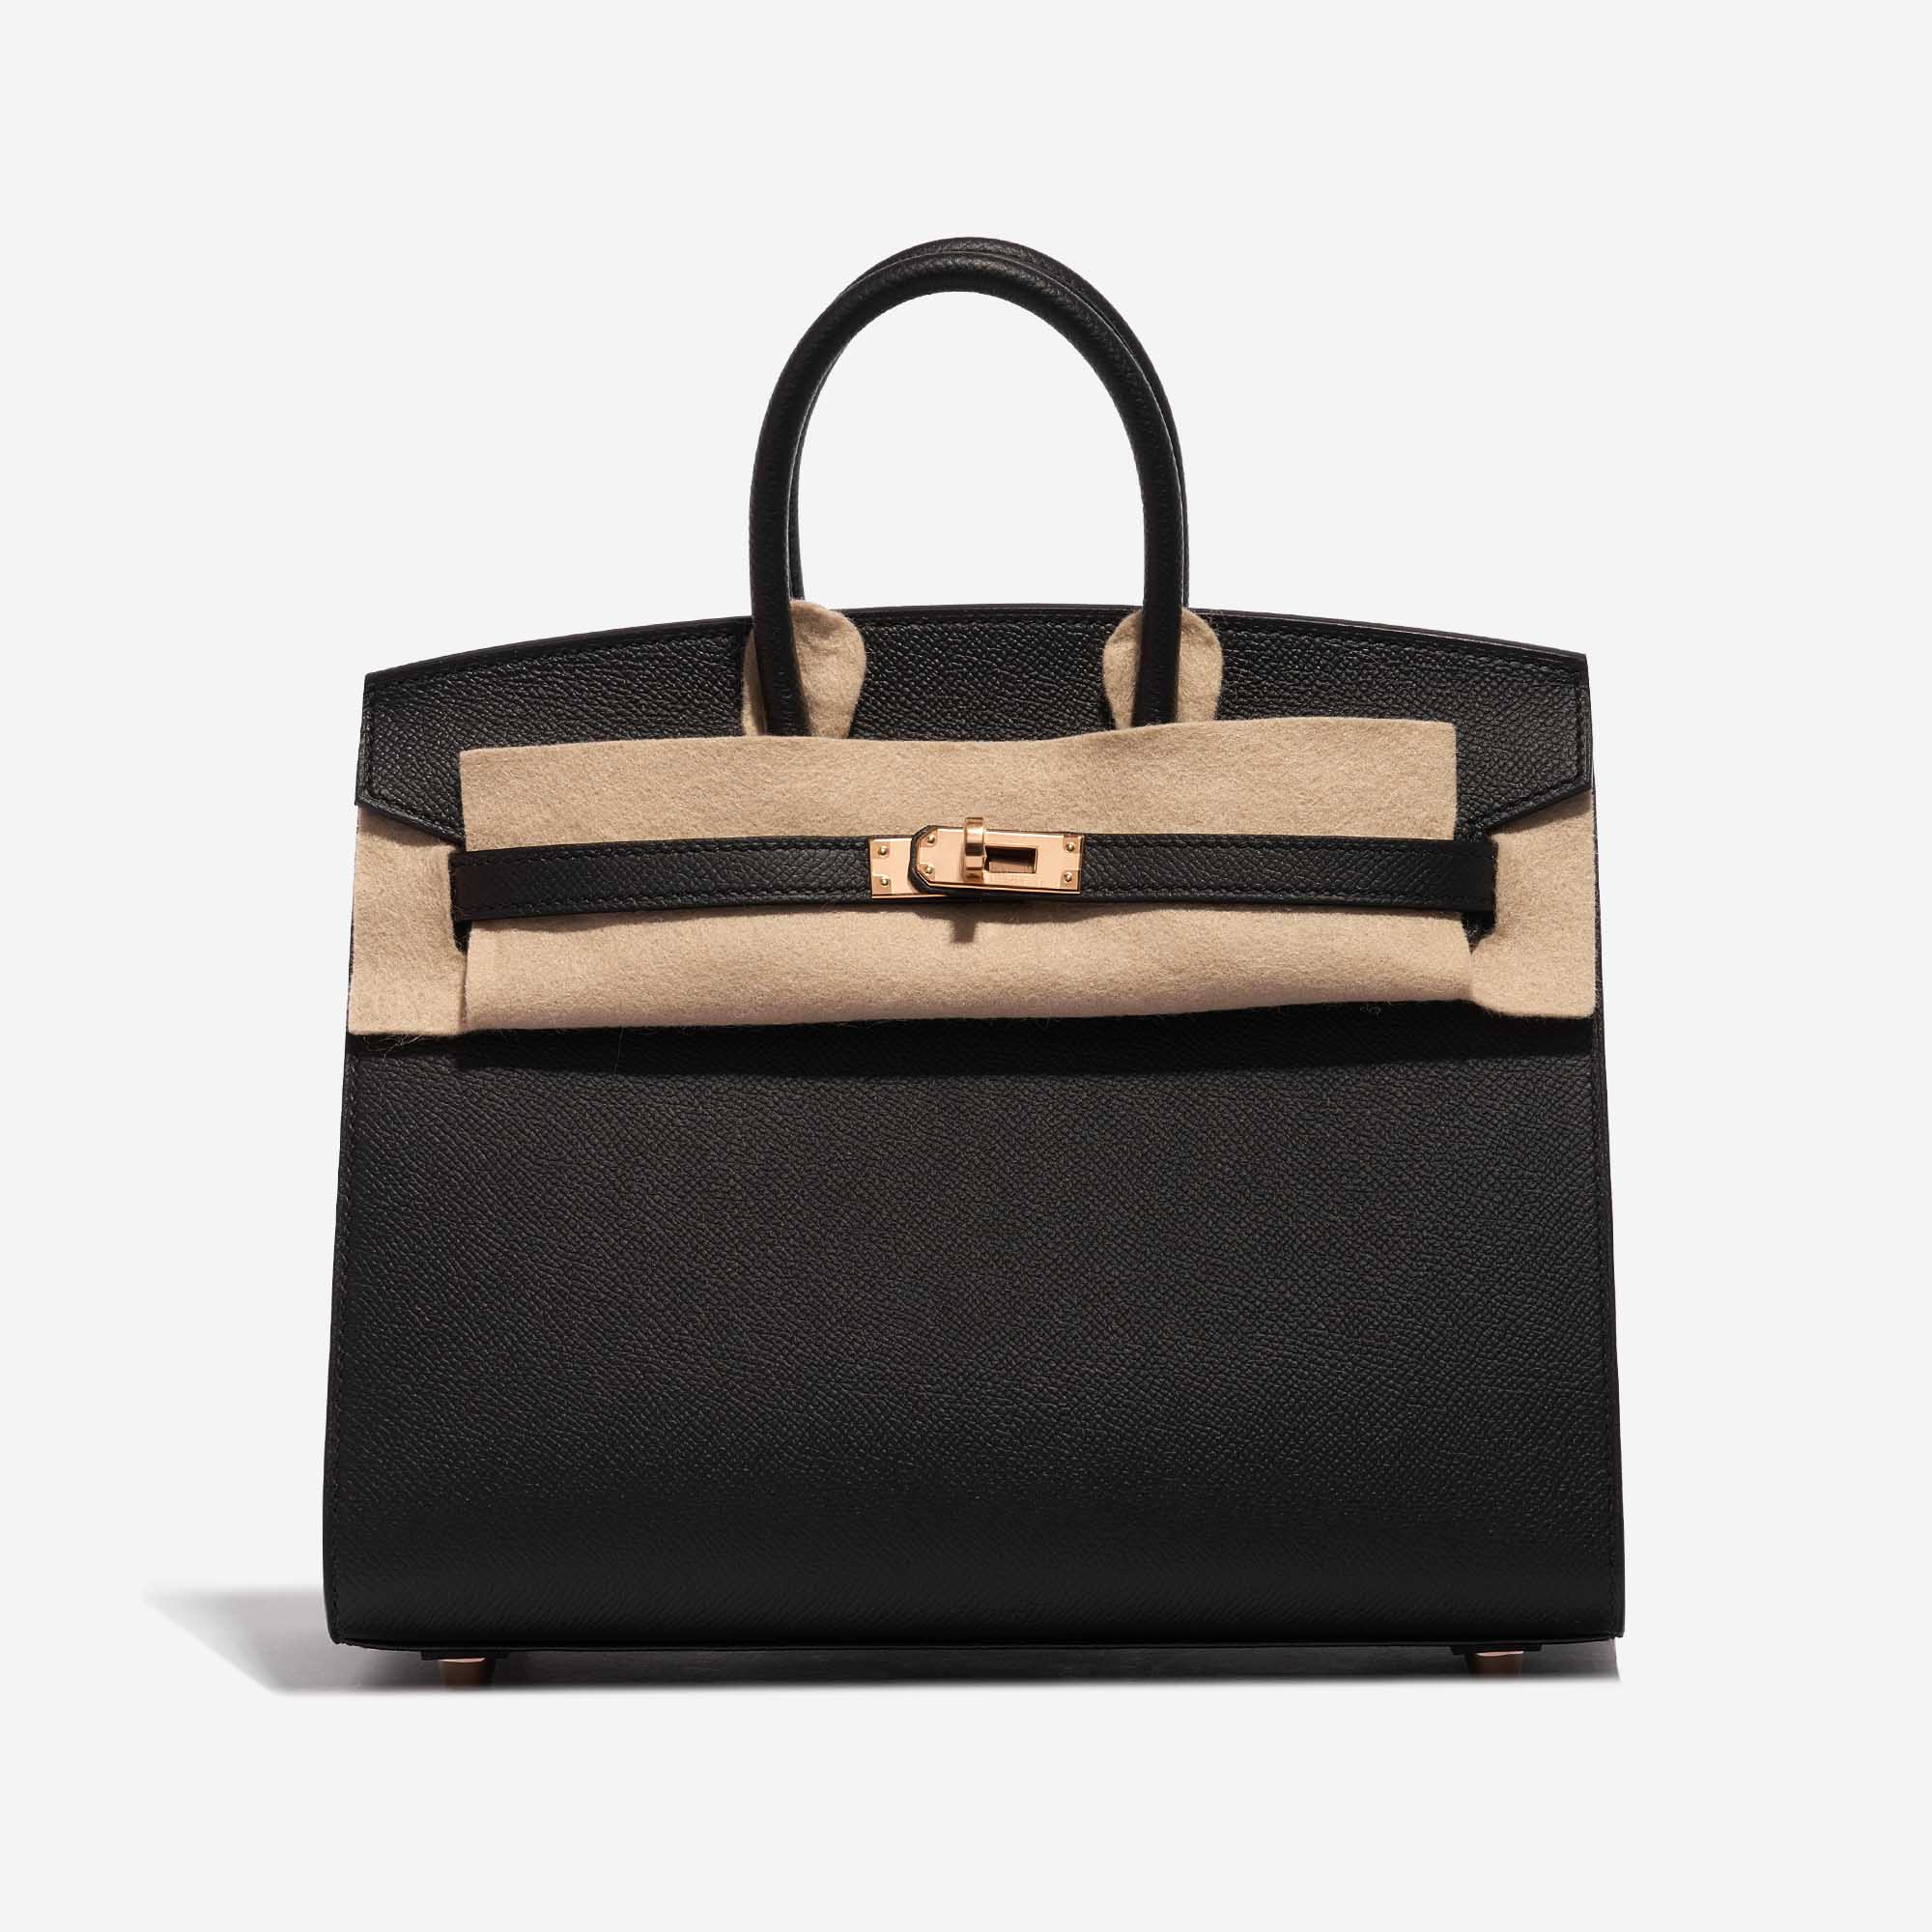 Hermès Birkin 25 cm Handbag in Black and Craie Epsom Leather